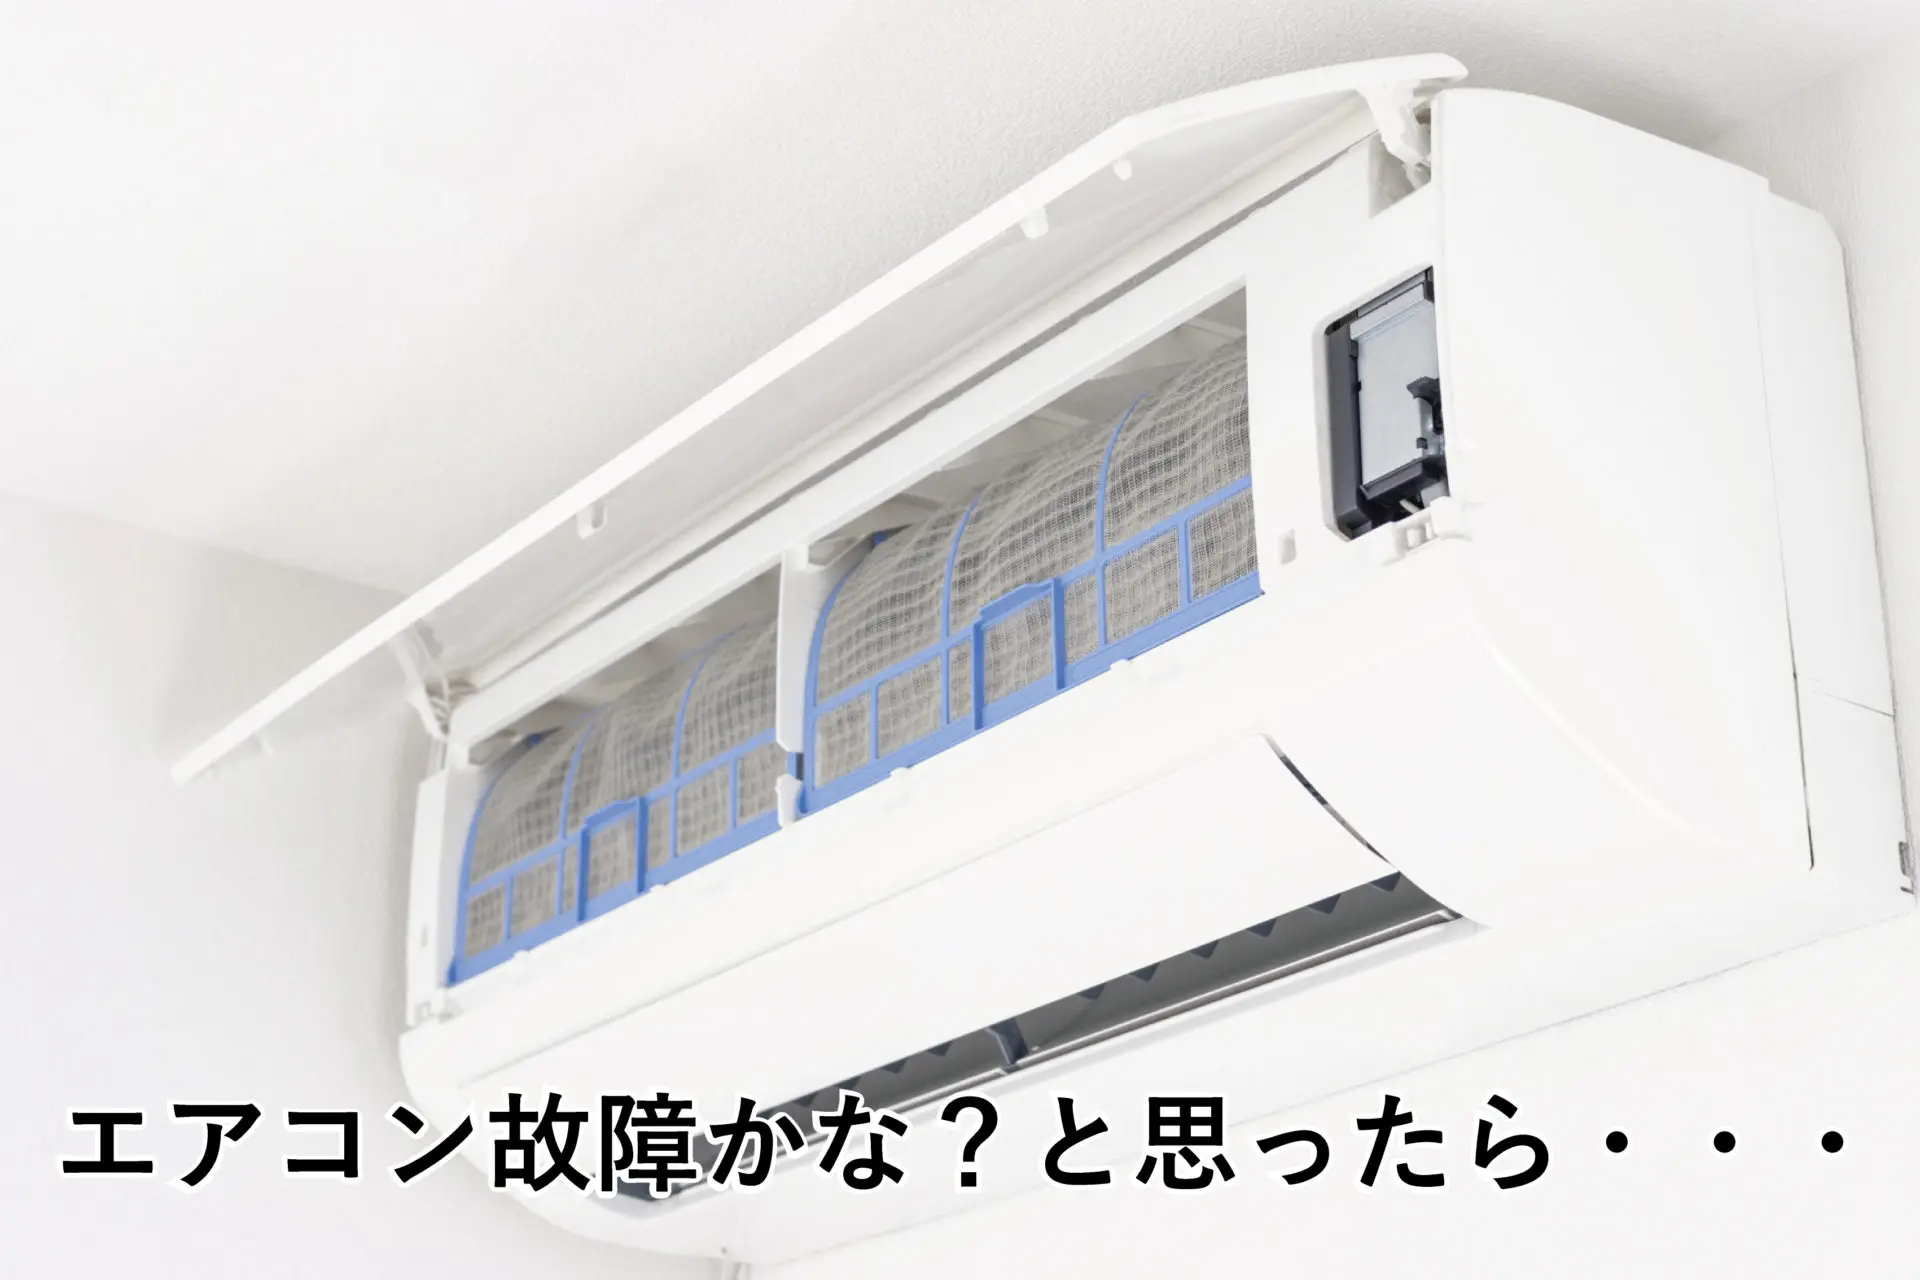 Shiawaseya-☆エアコンのお手入れ方法のご紹介☆　エアコン故障かな？と思ったら